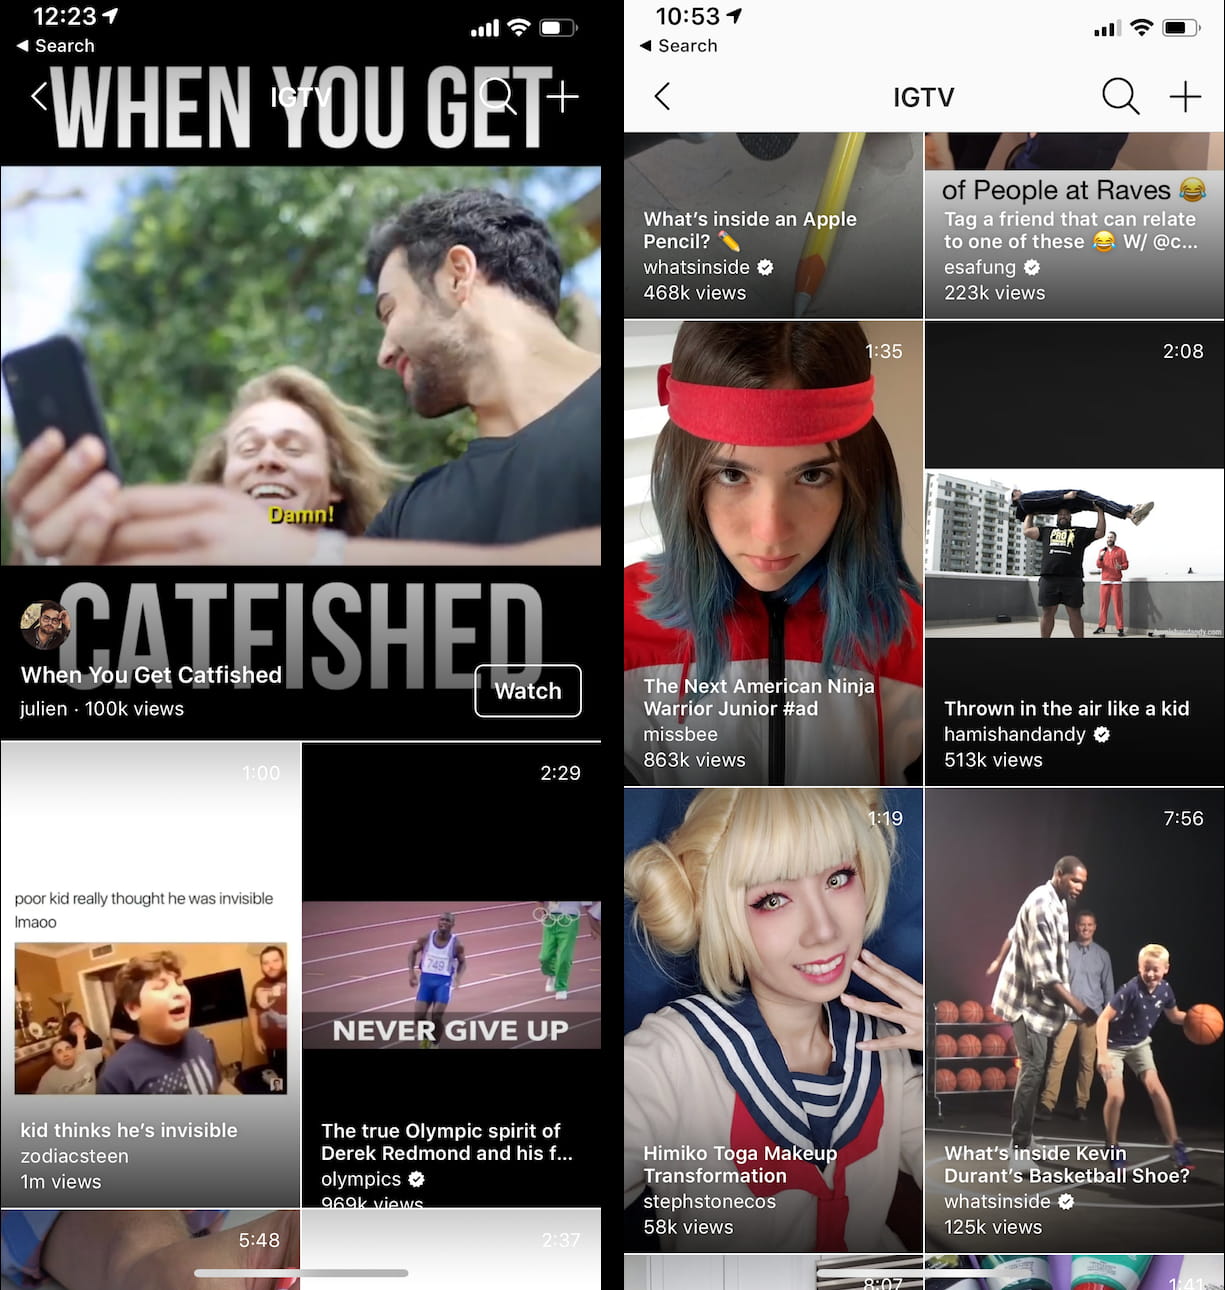 Instagram redesigns IGTV's stream